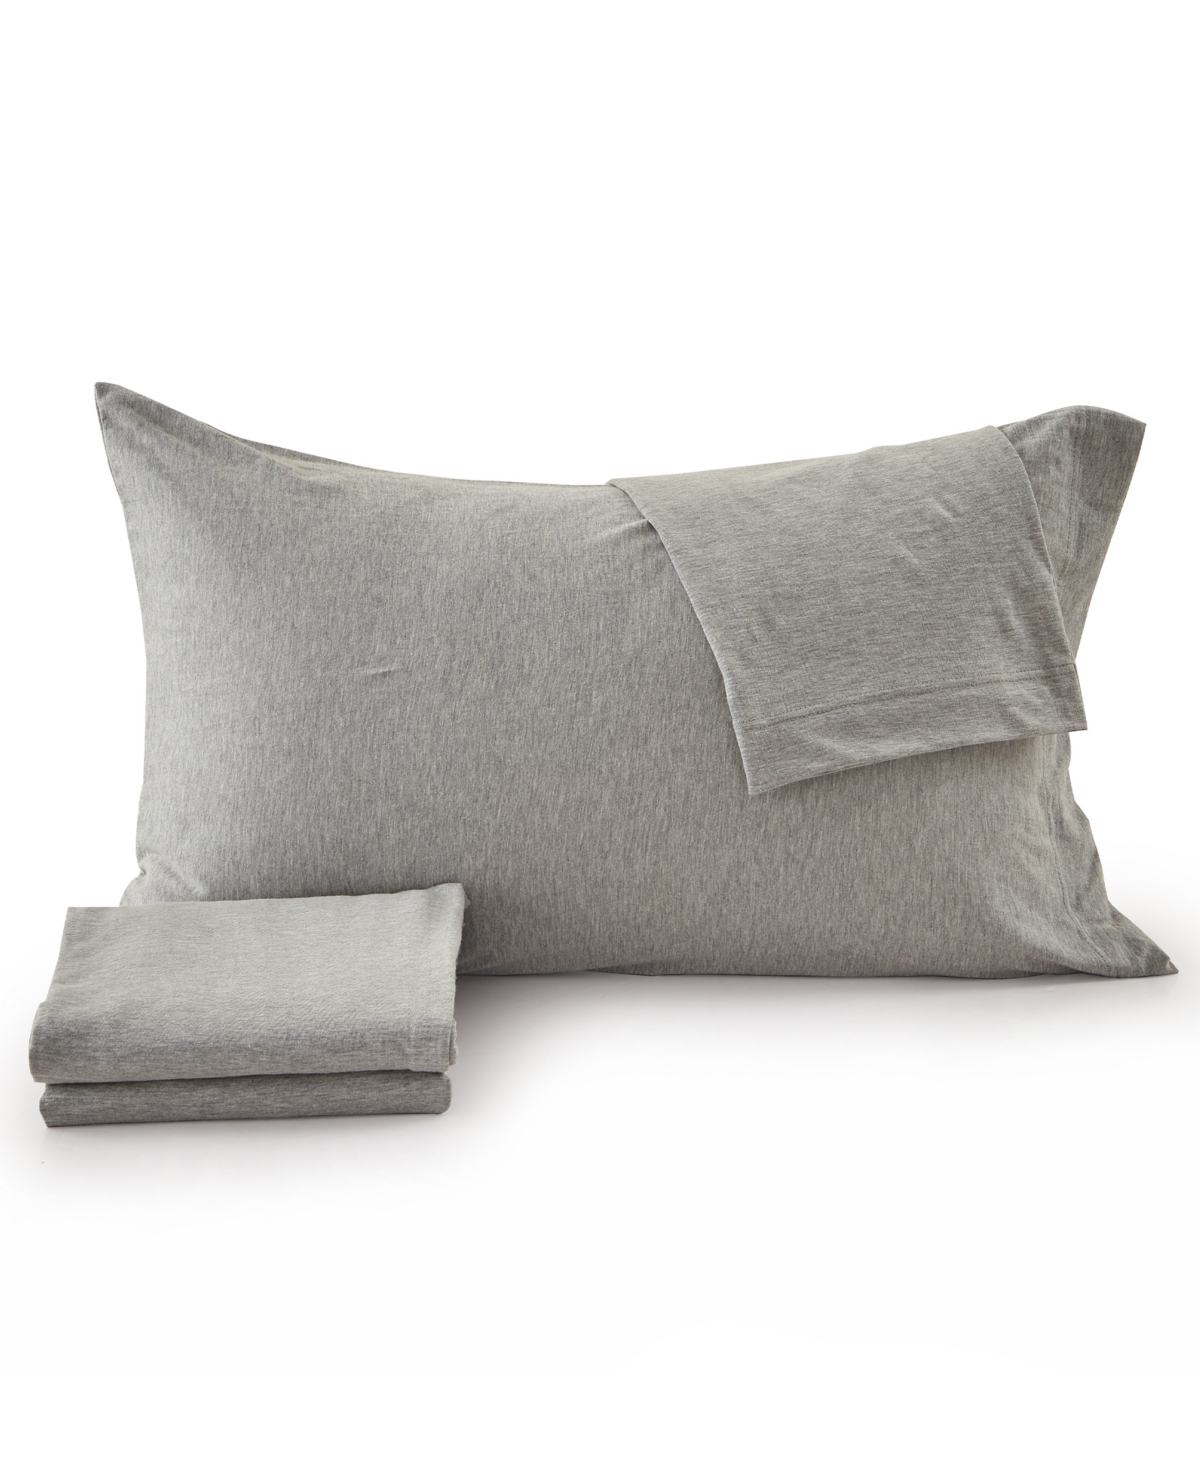 Premium Comforts Heathered Melange T-shirt Jersey Knit Cotton Blend 4 Piece Sheet Set, Twin Xl In Light Gray